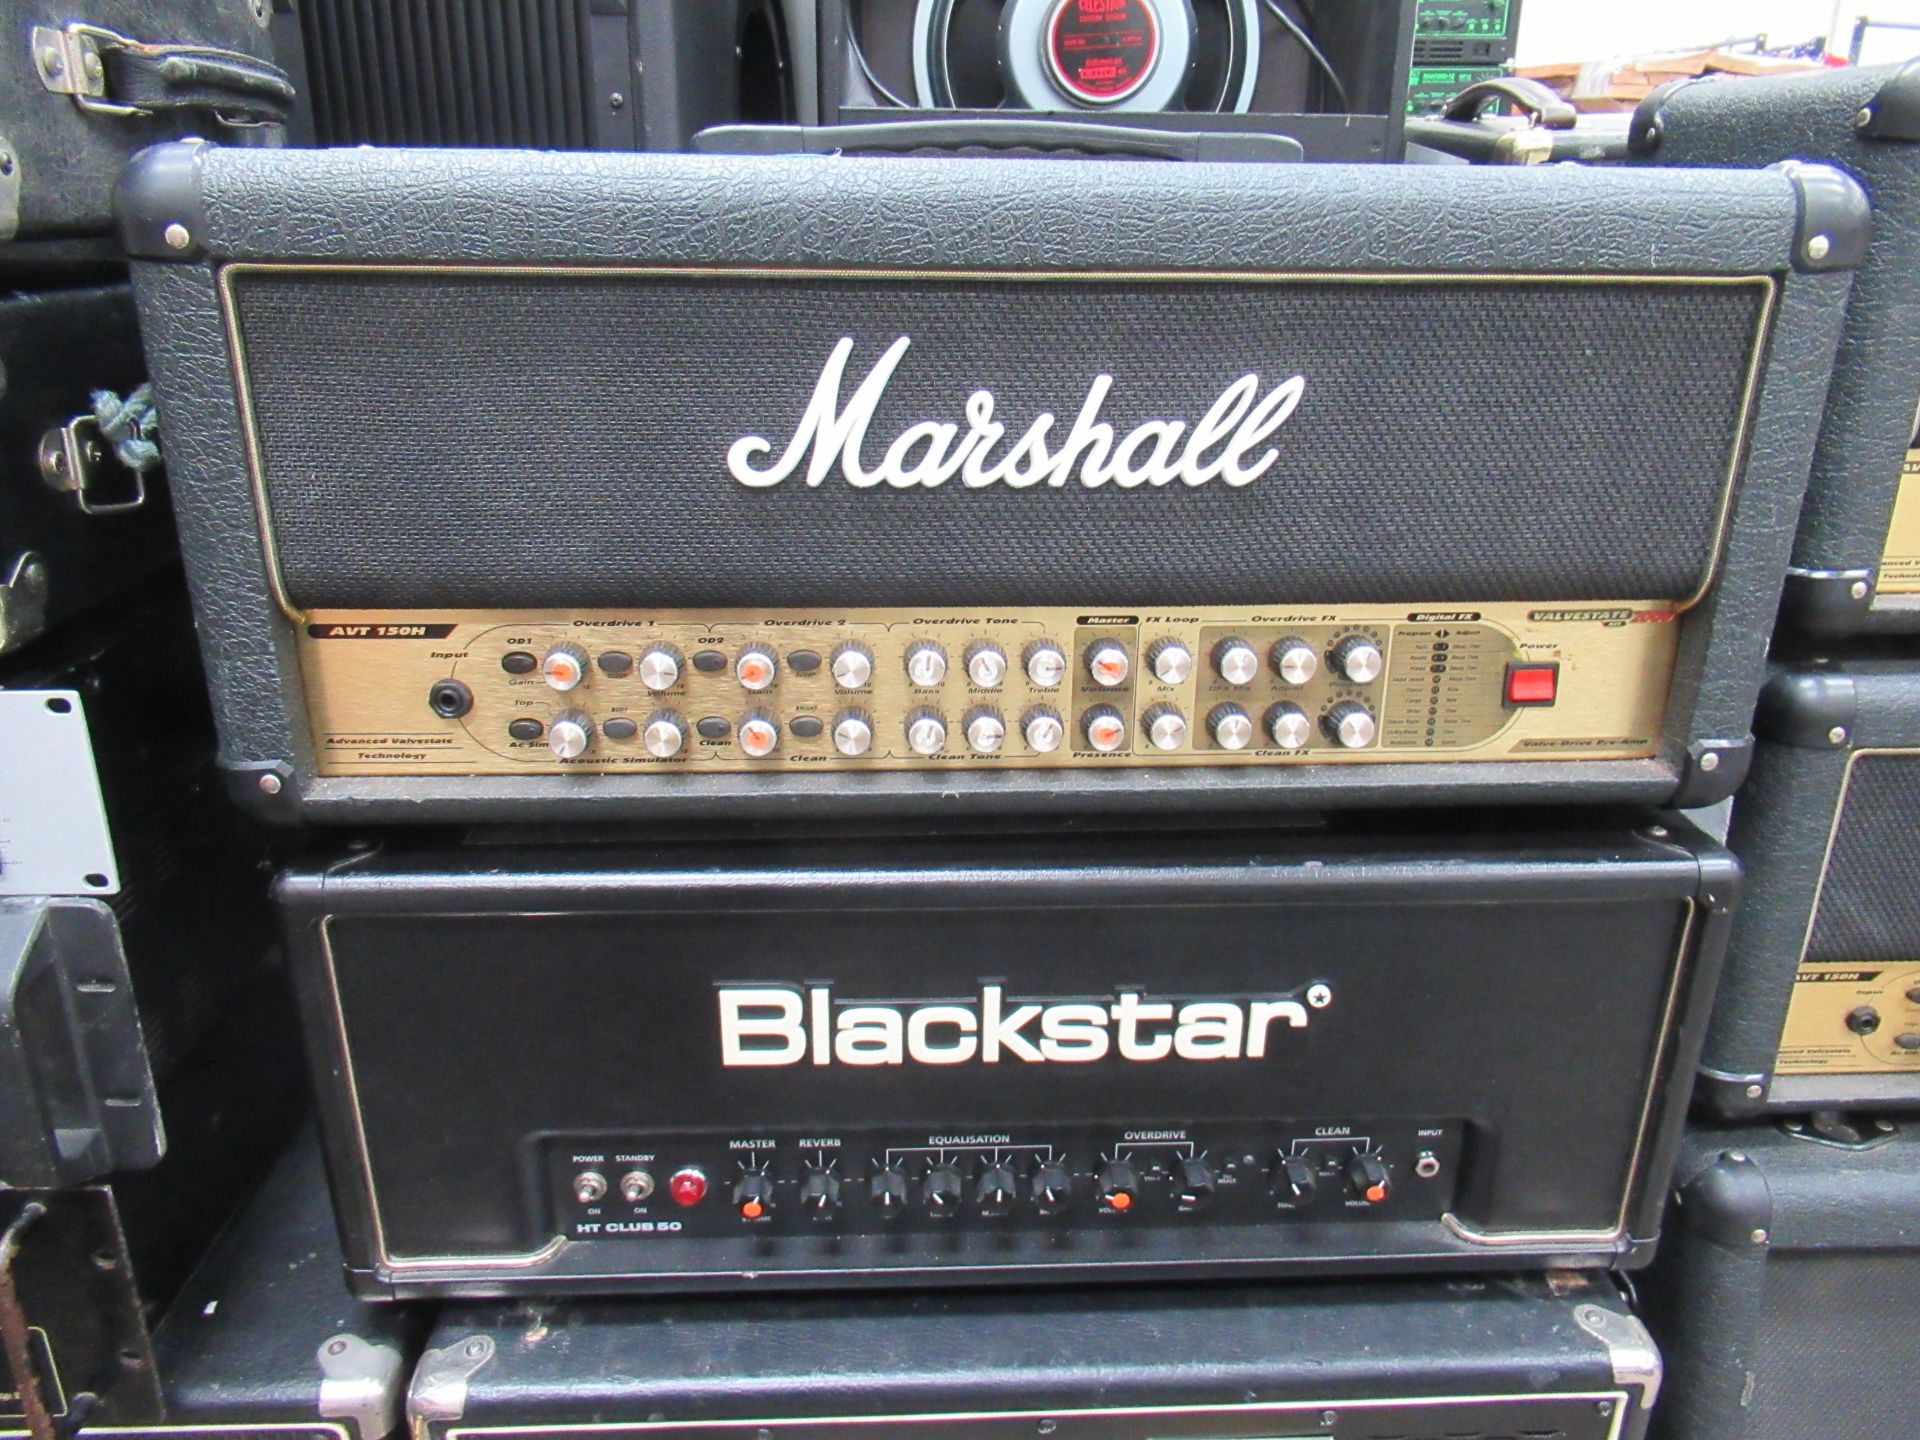 2x Amplifiers (Marshall & Blackstar) and 2x Ashdown Speakers